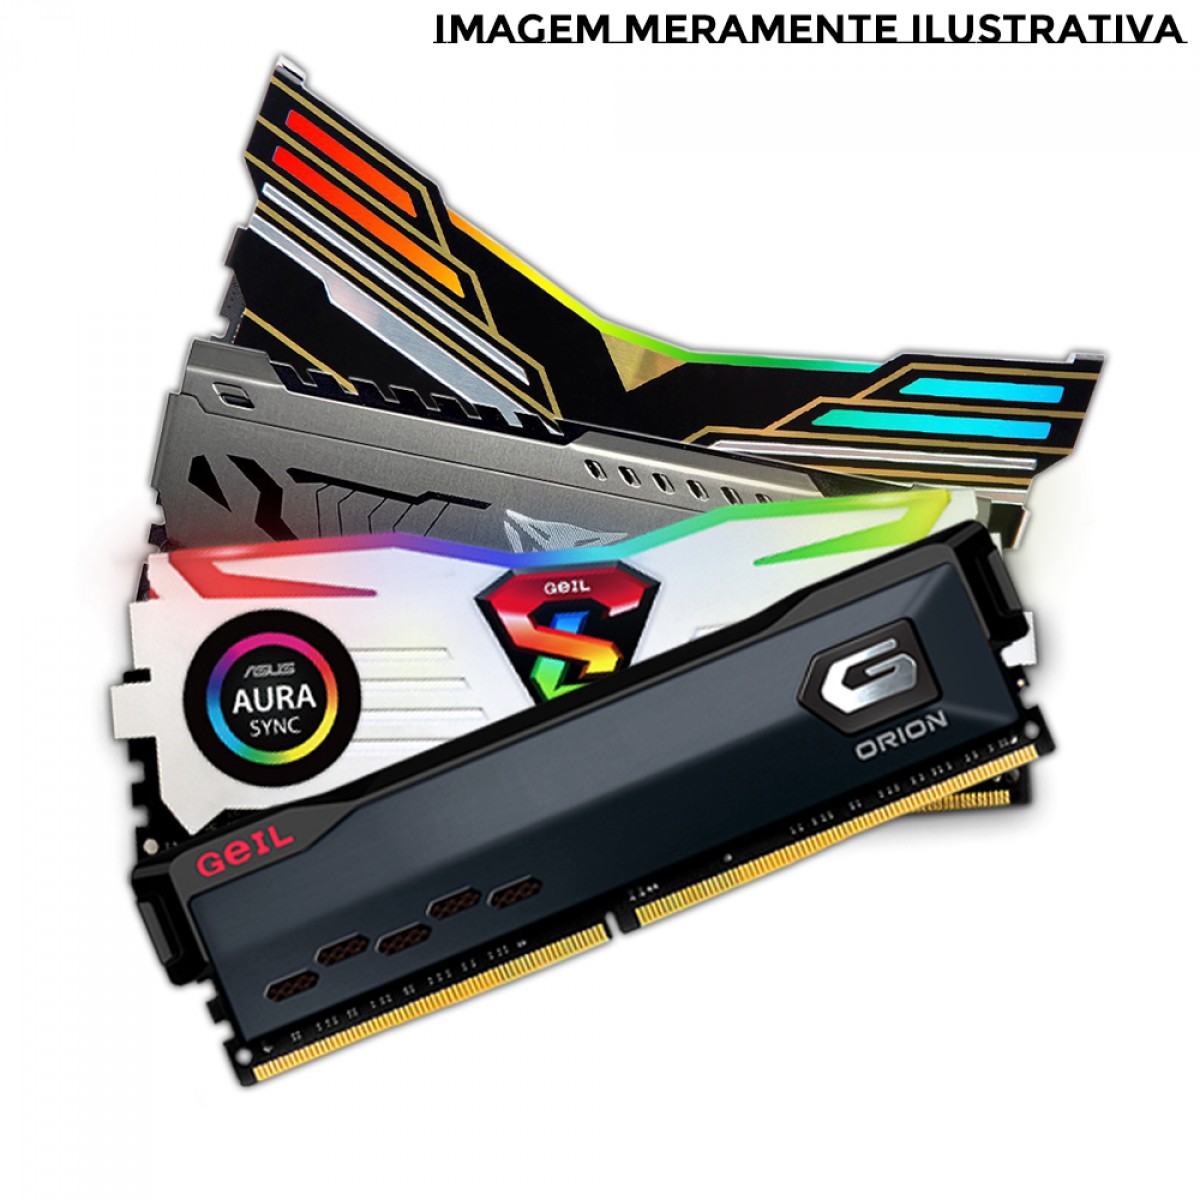 Kit Upgrade, AMD Ryzen 5 5600G + Placa Mãe A520 + 16GB DDR4